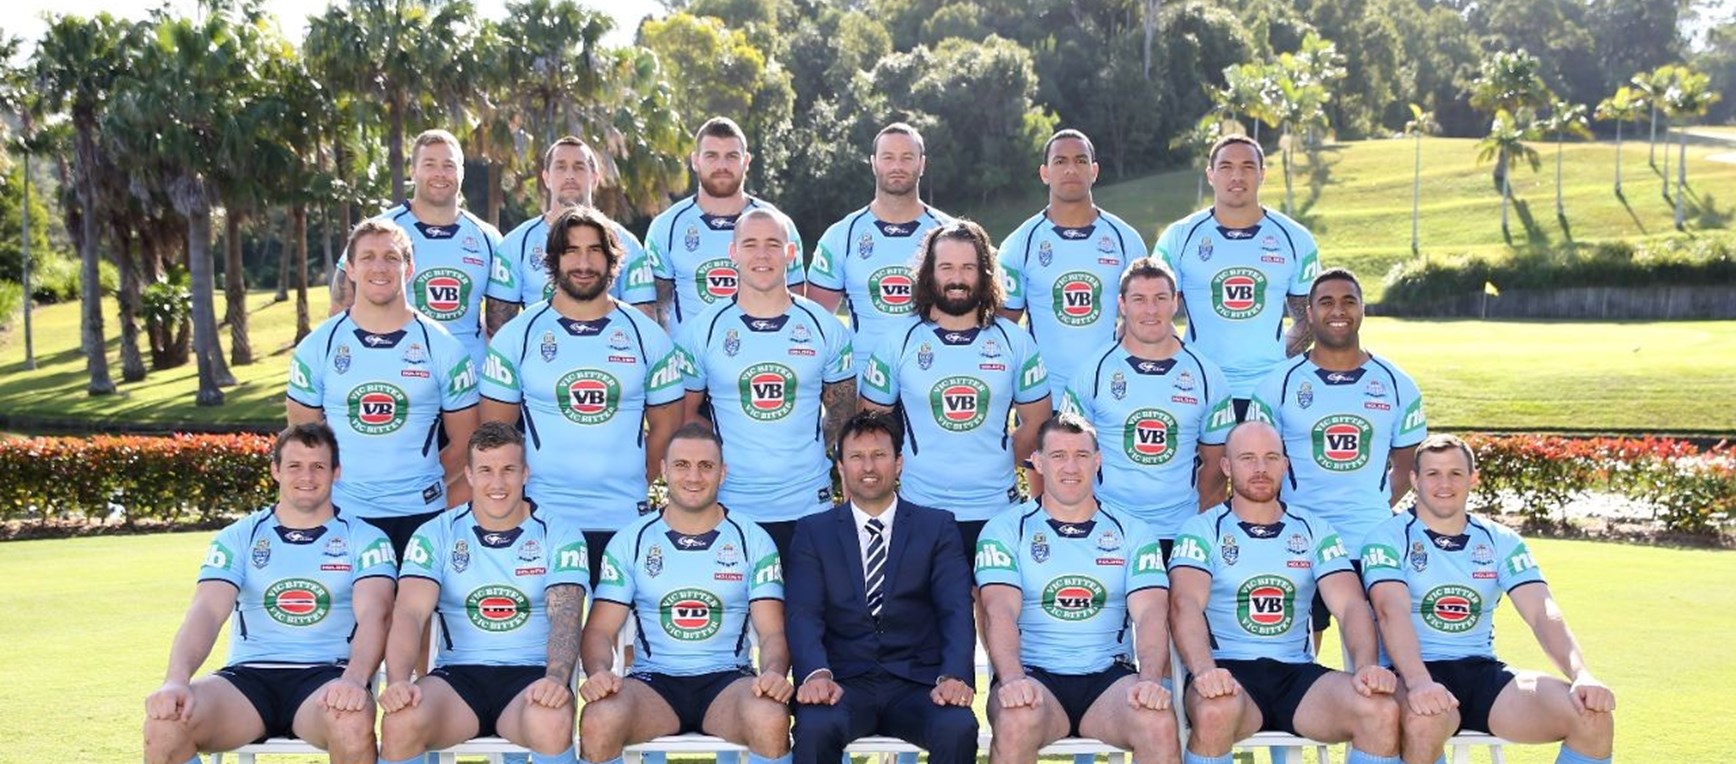 GALLERY: 2015 NSW VB Blues Team Photo shoot